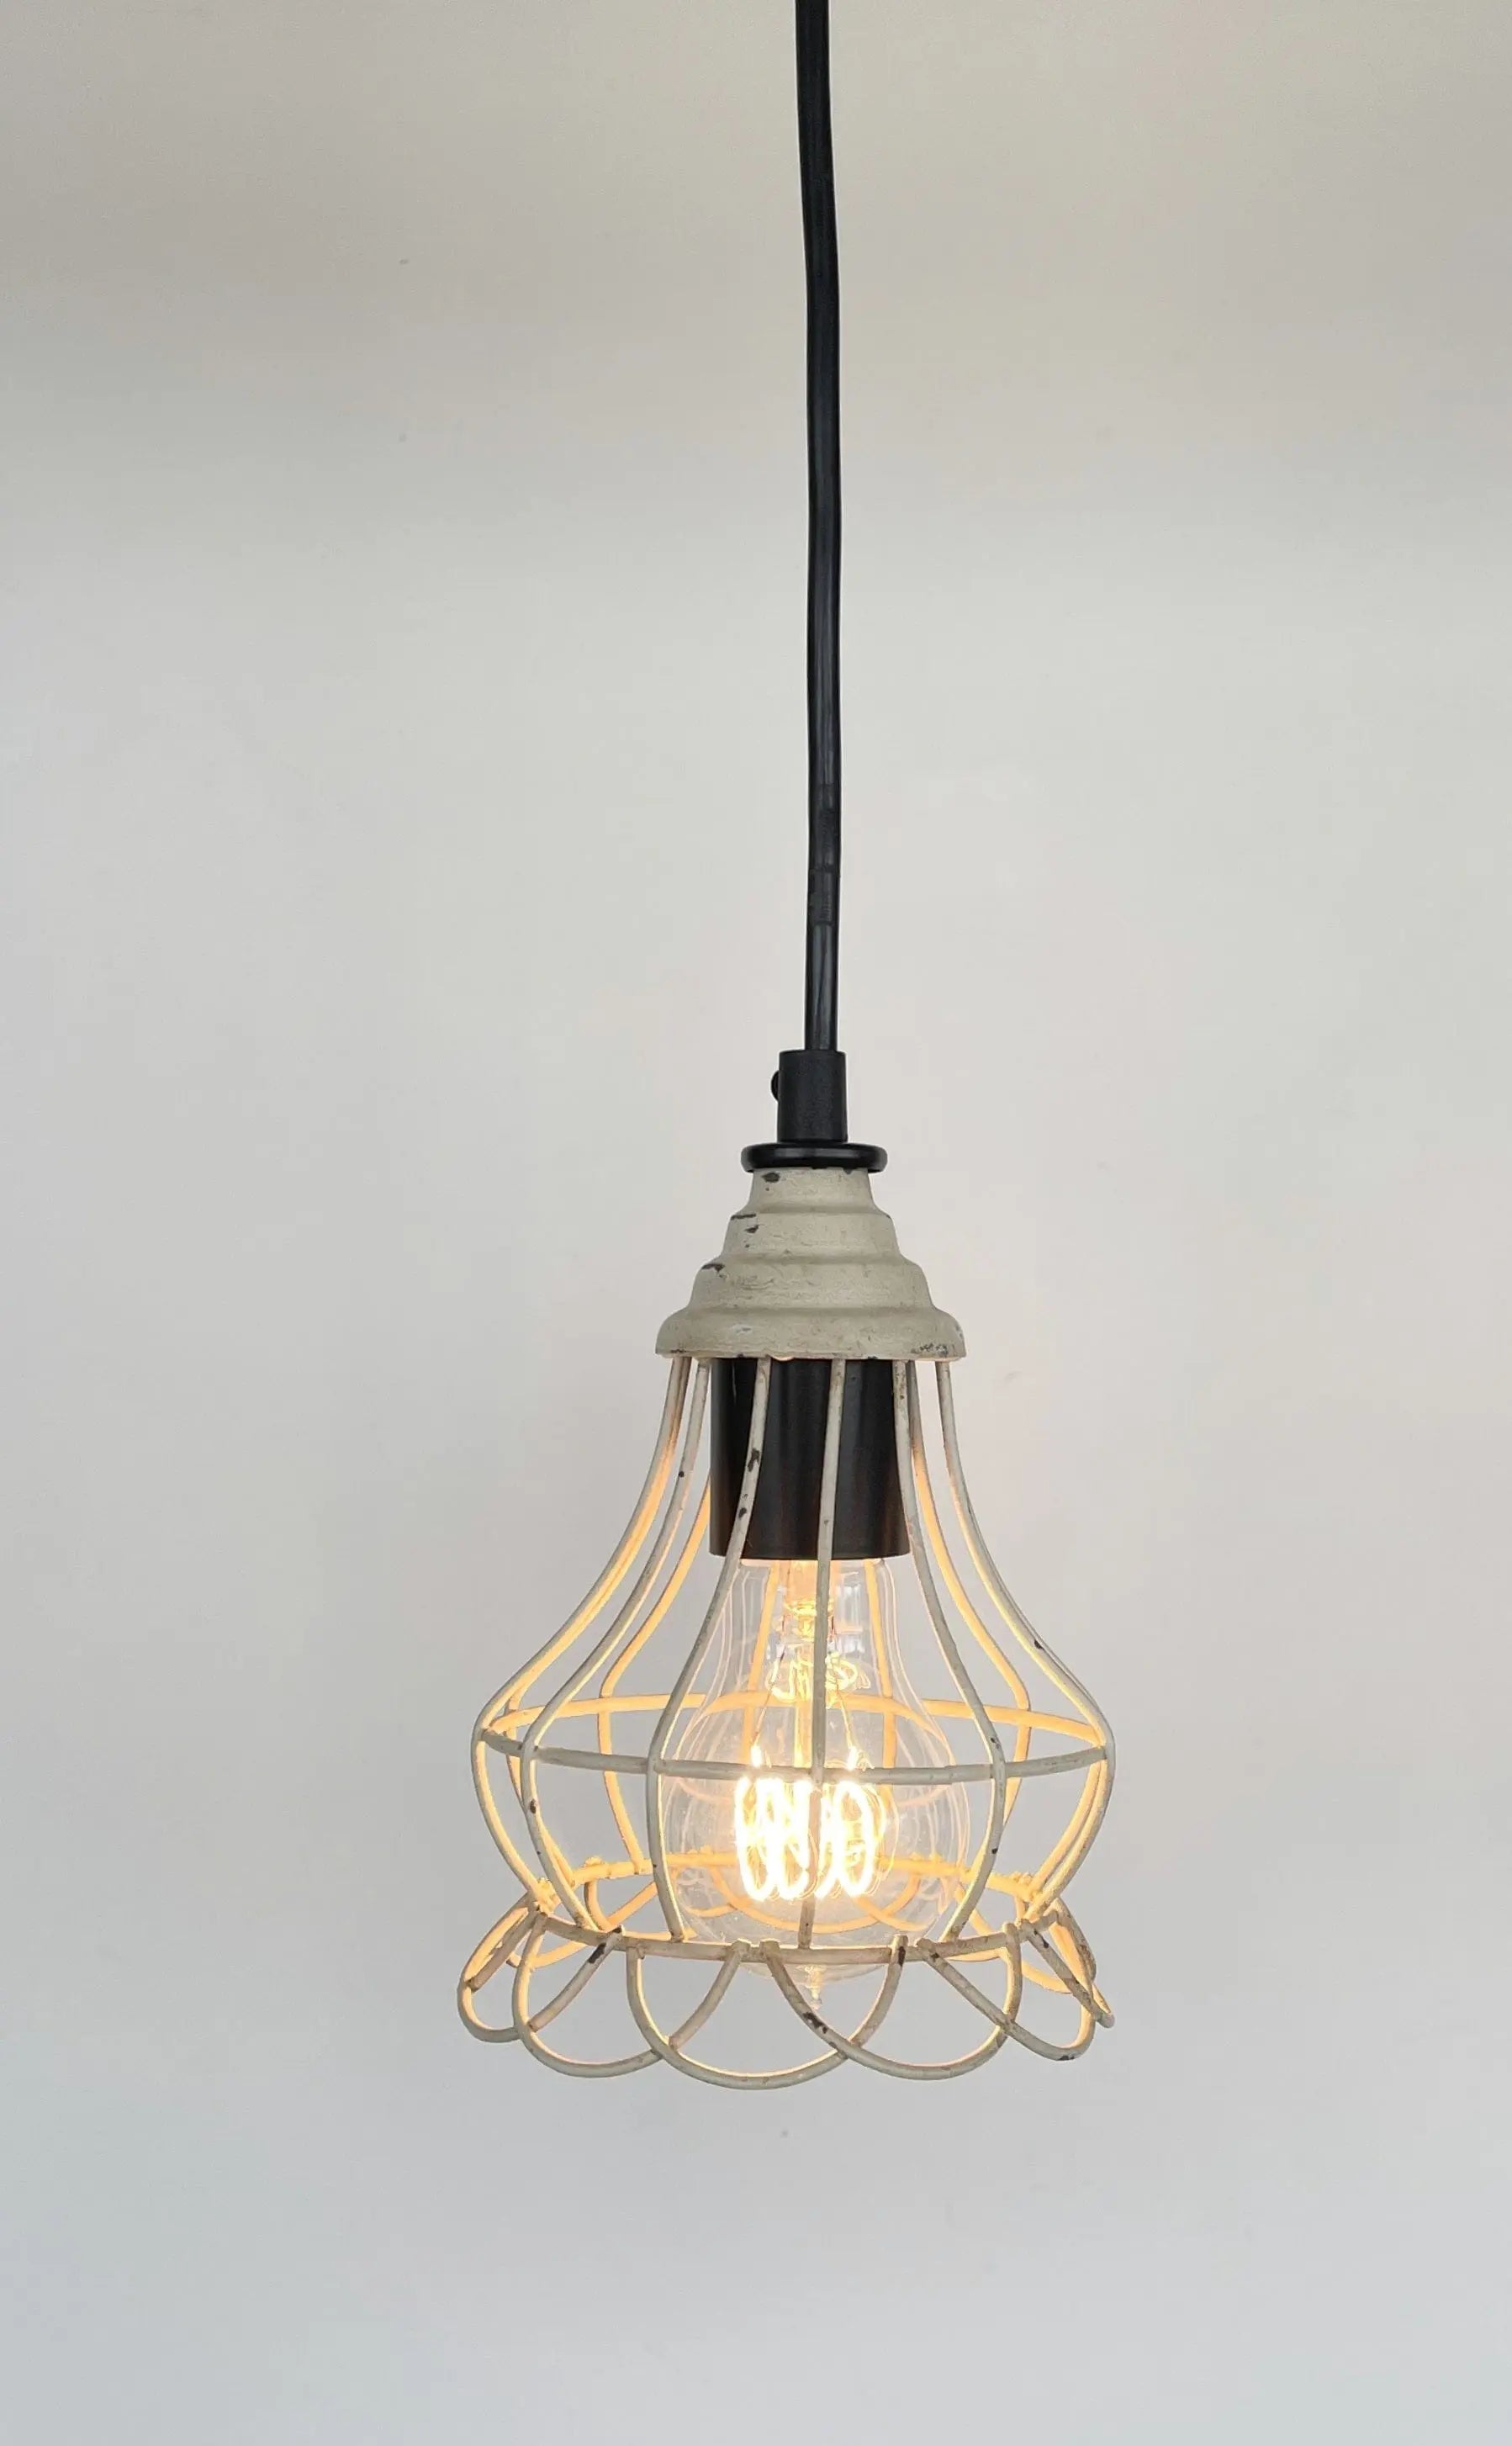 Rustic Industrial Farmhouse Pendant Light - The Lamp Goods